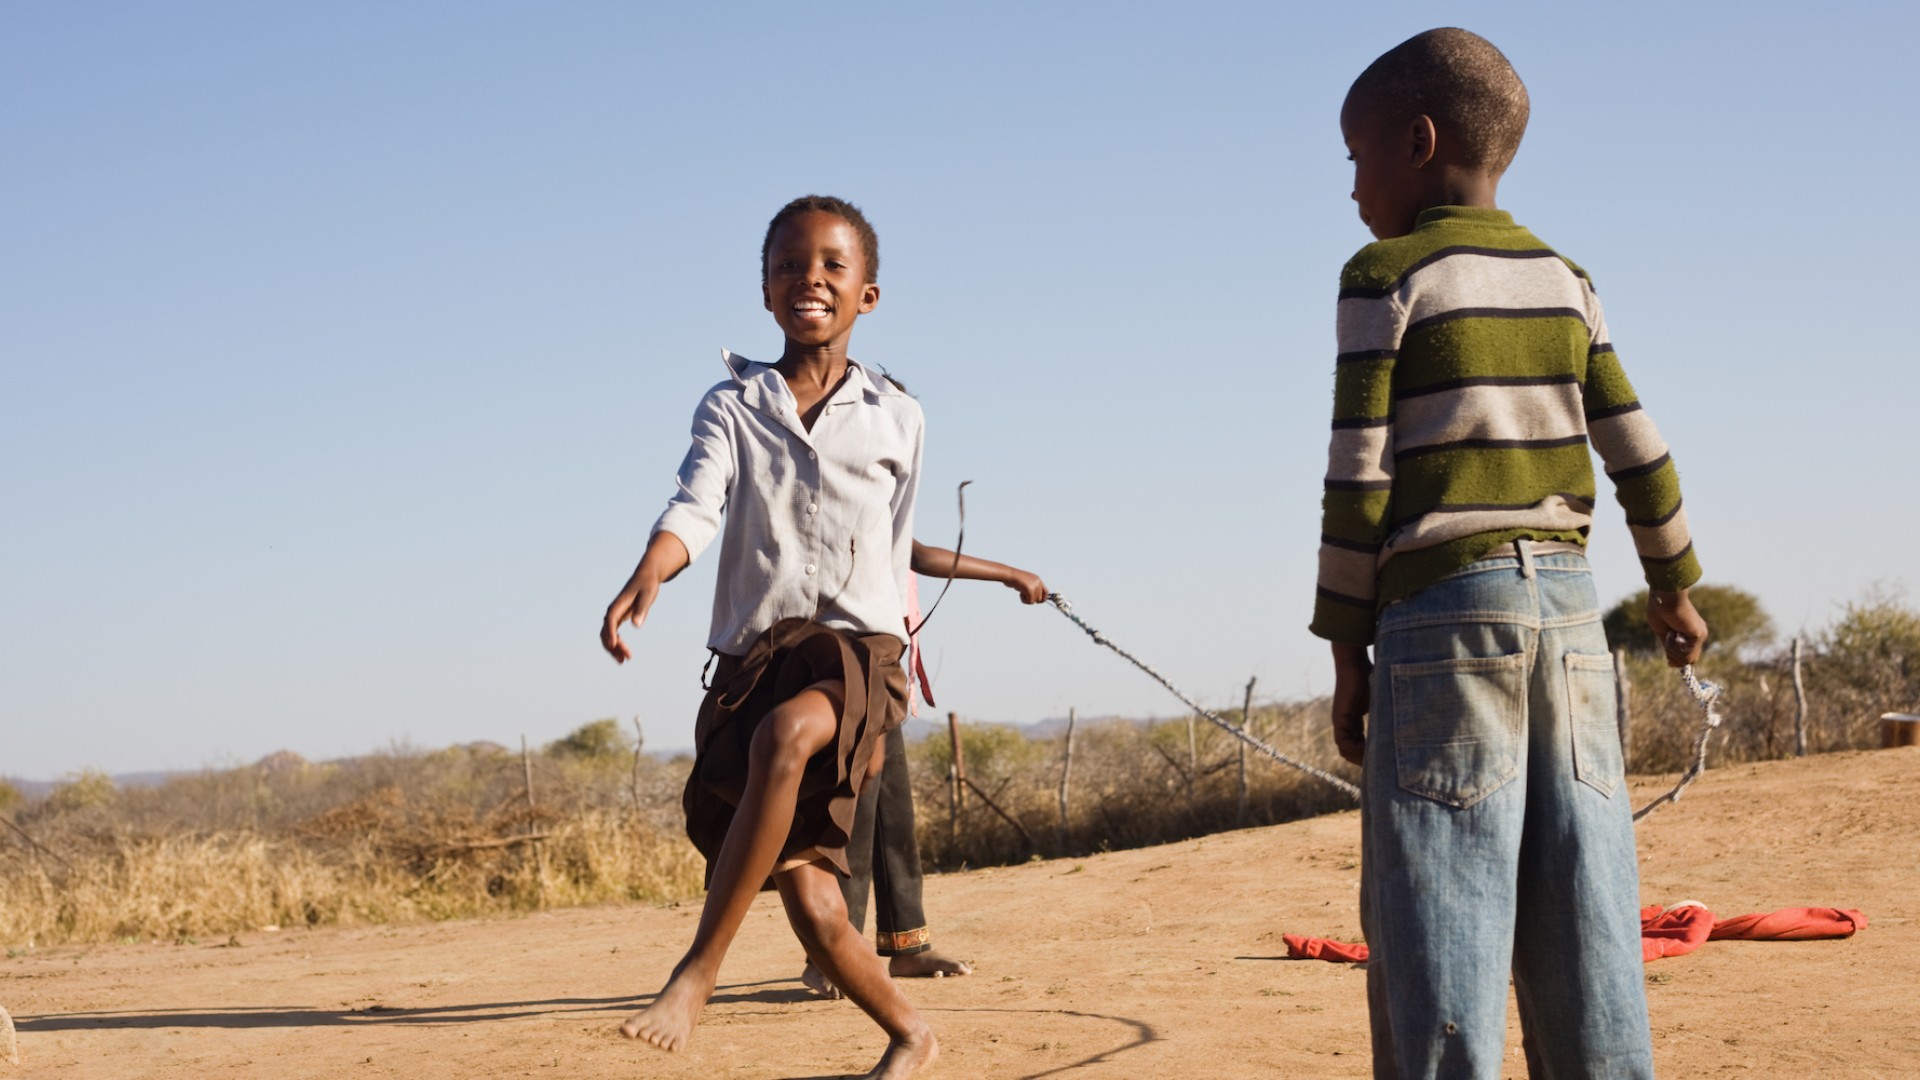 Two kids dancing in the dirt in Botswana